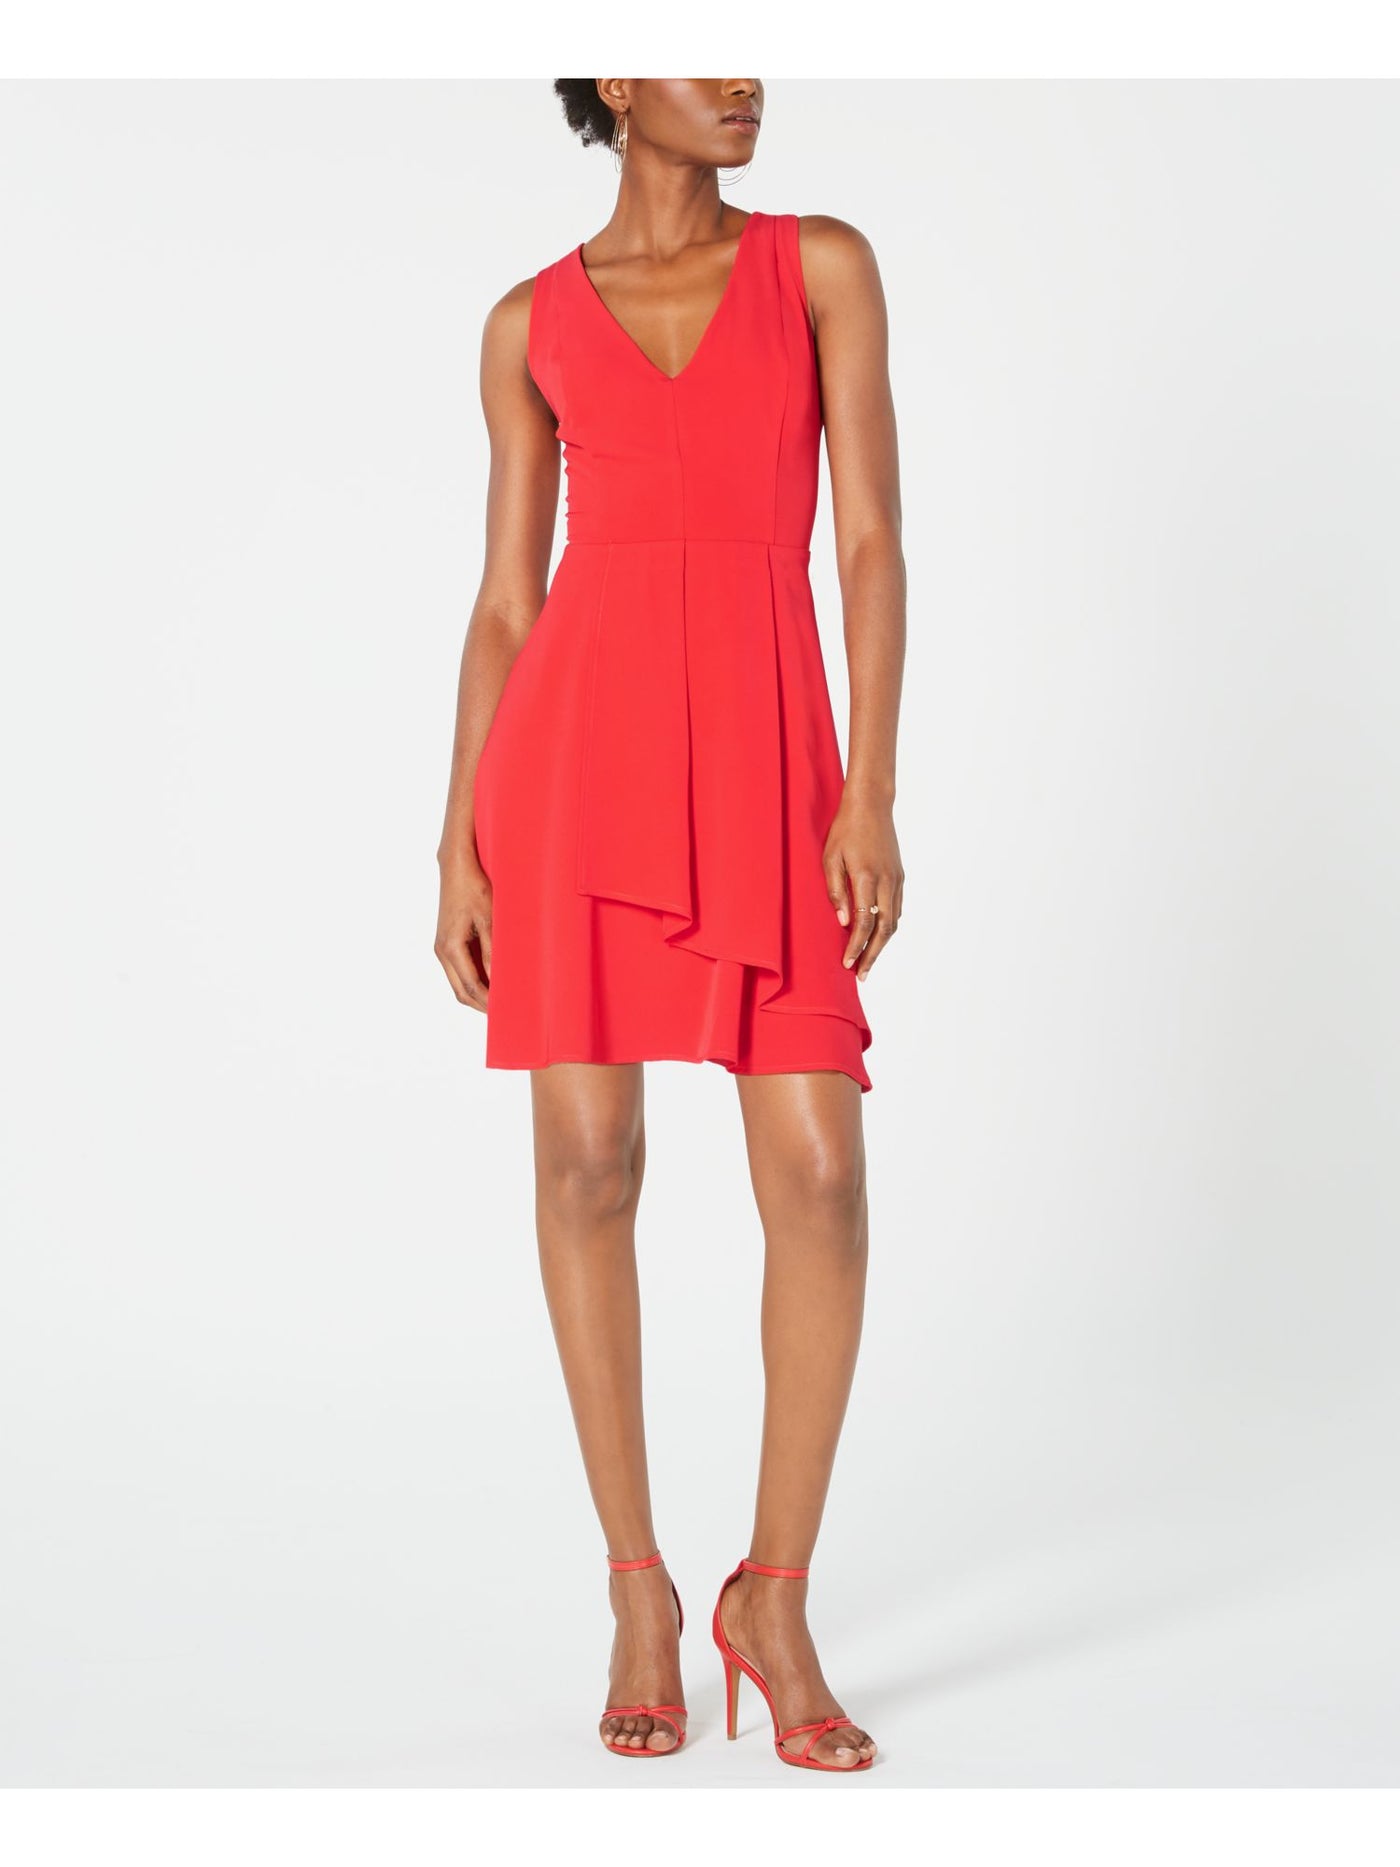 19 COOPER Womens Red Sleeveless V Neck Mini Fit + Flare Dress XS